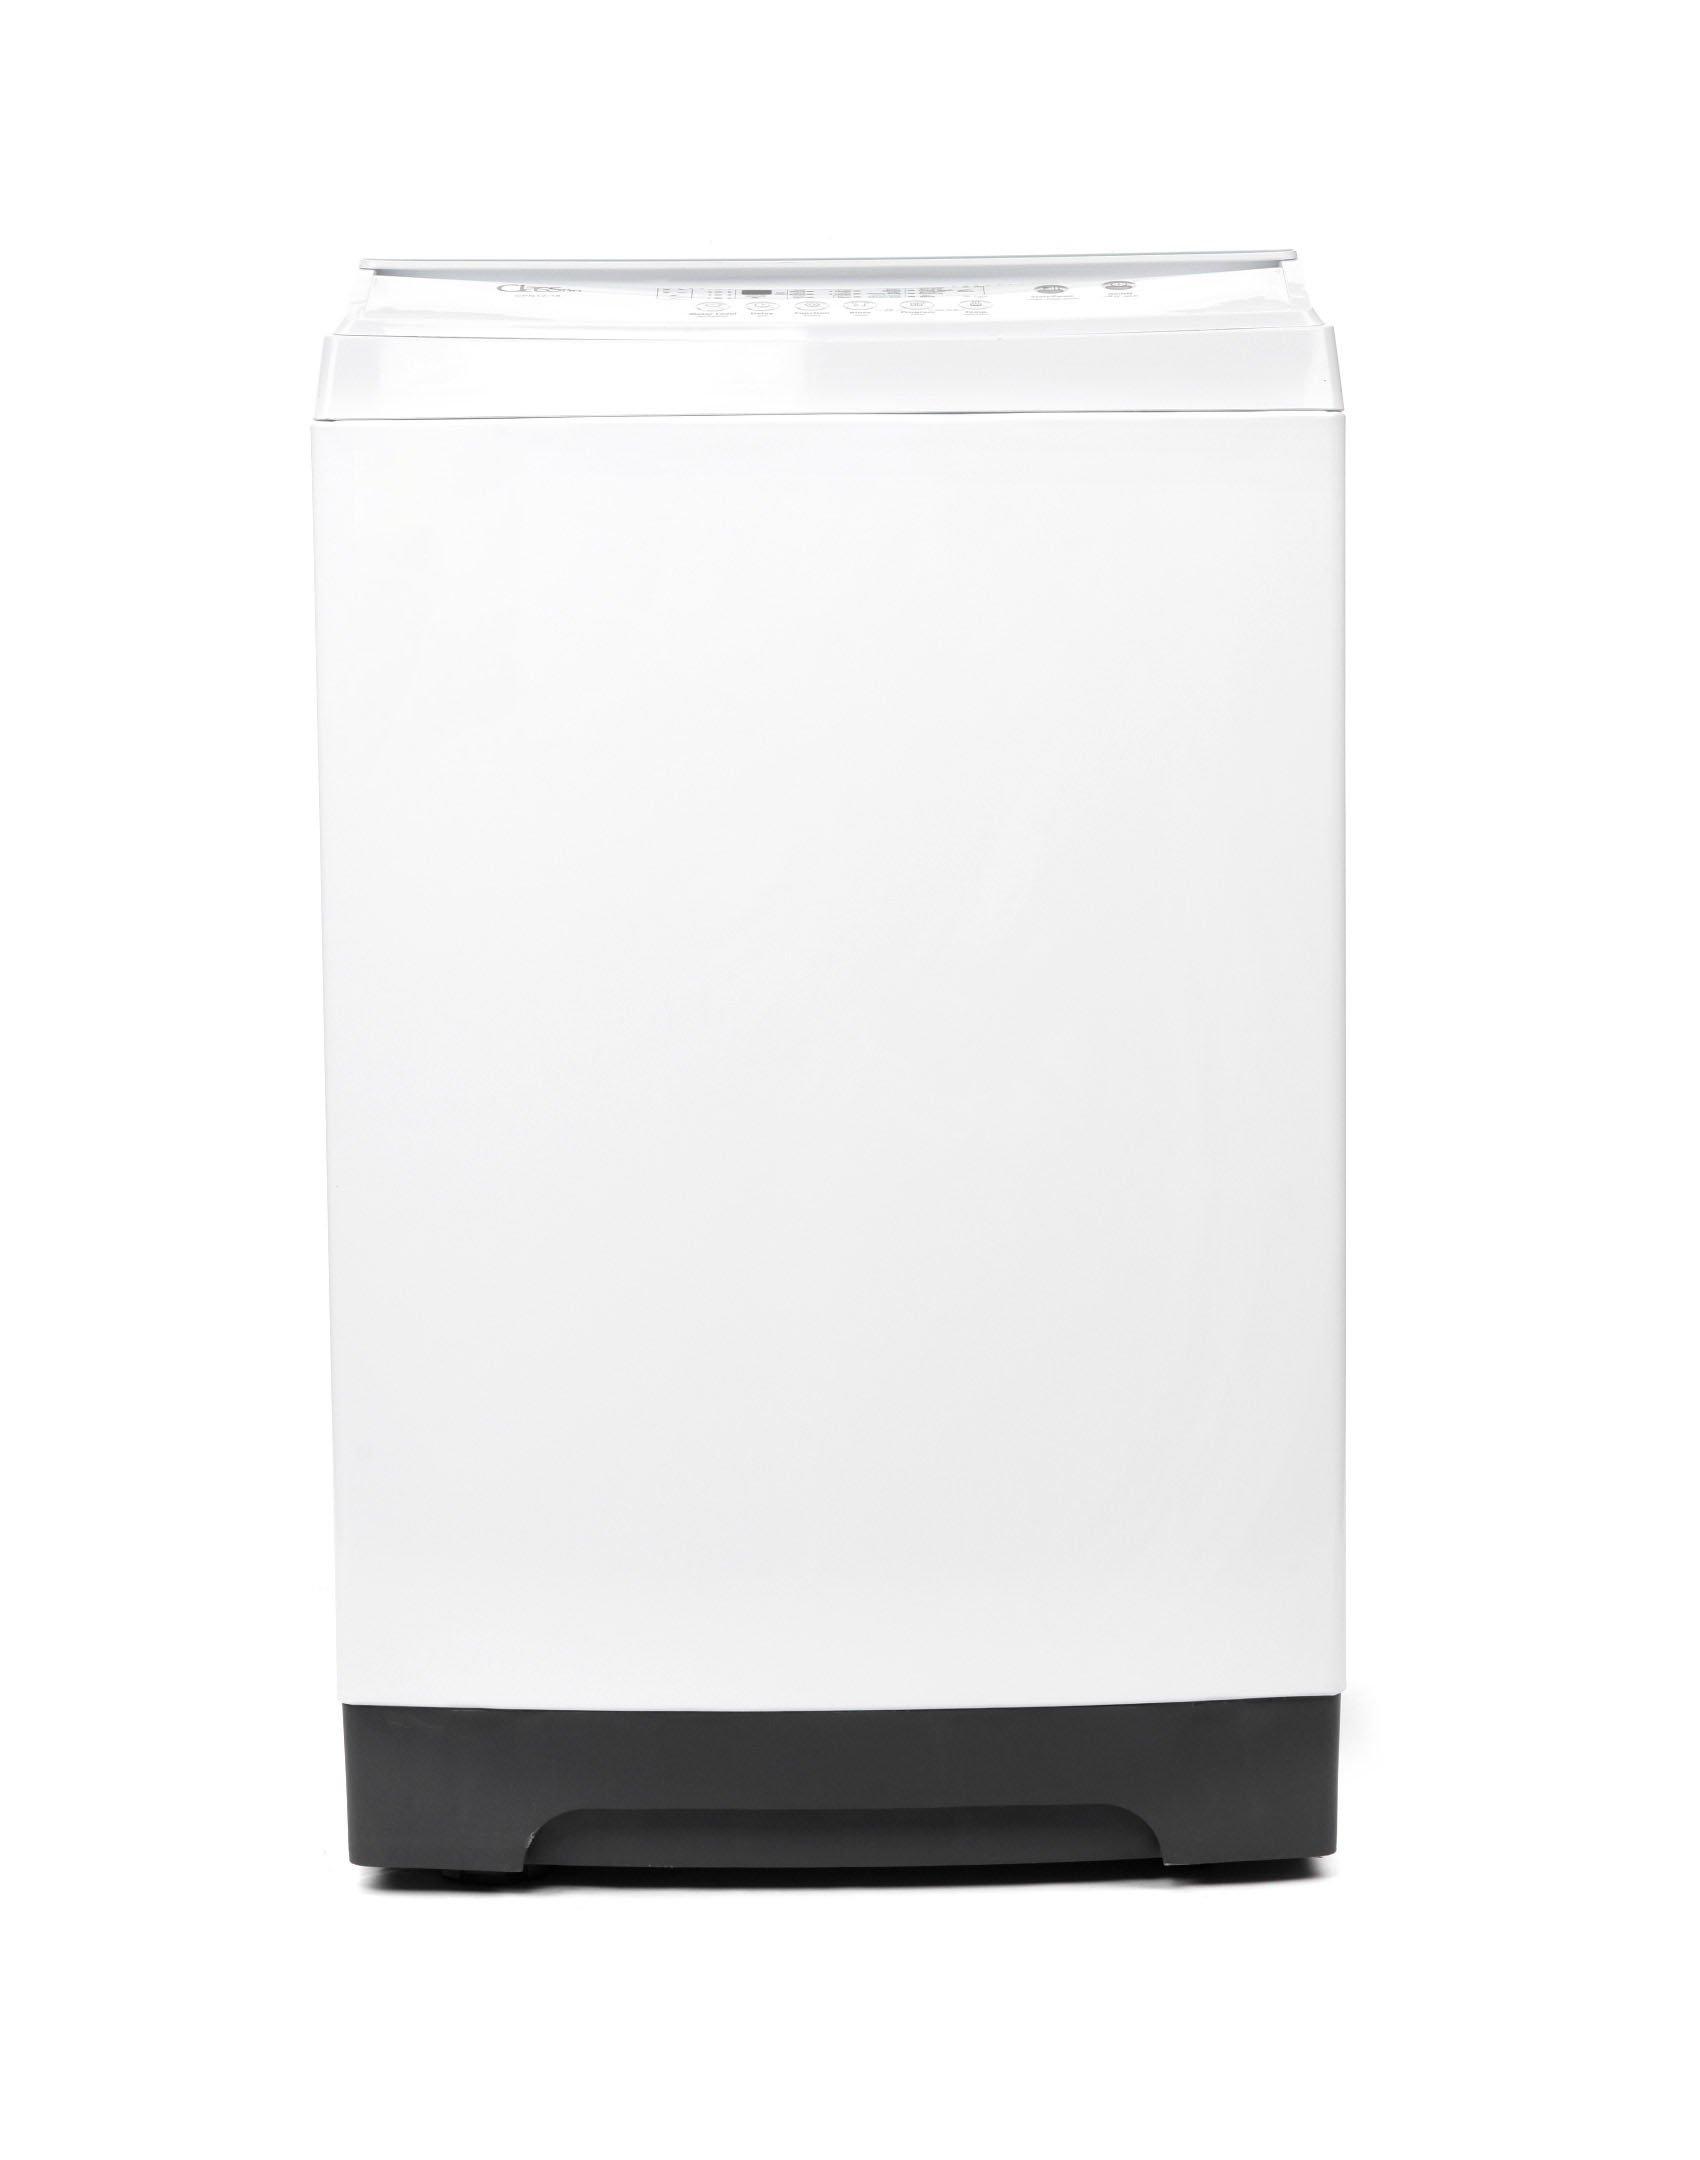 Buy ClassPro Top Load Fully Automatic Washing Machine, 12kg, White in Saudi Arabia